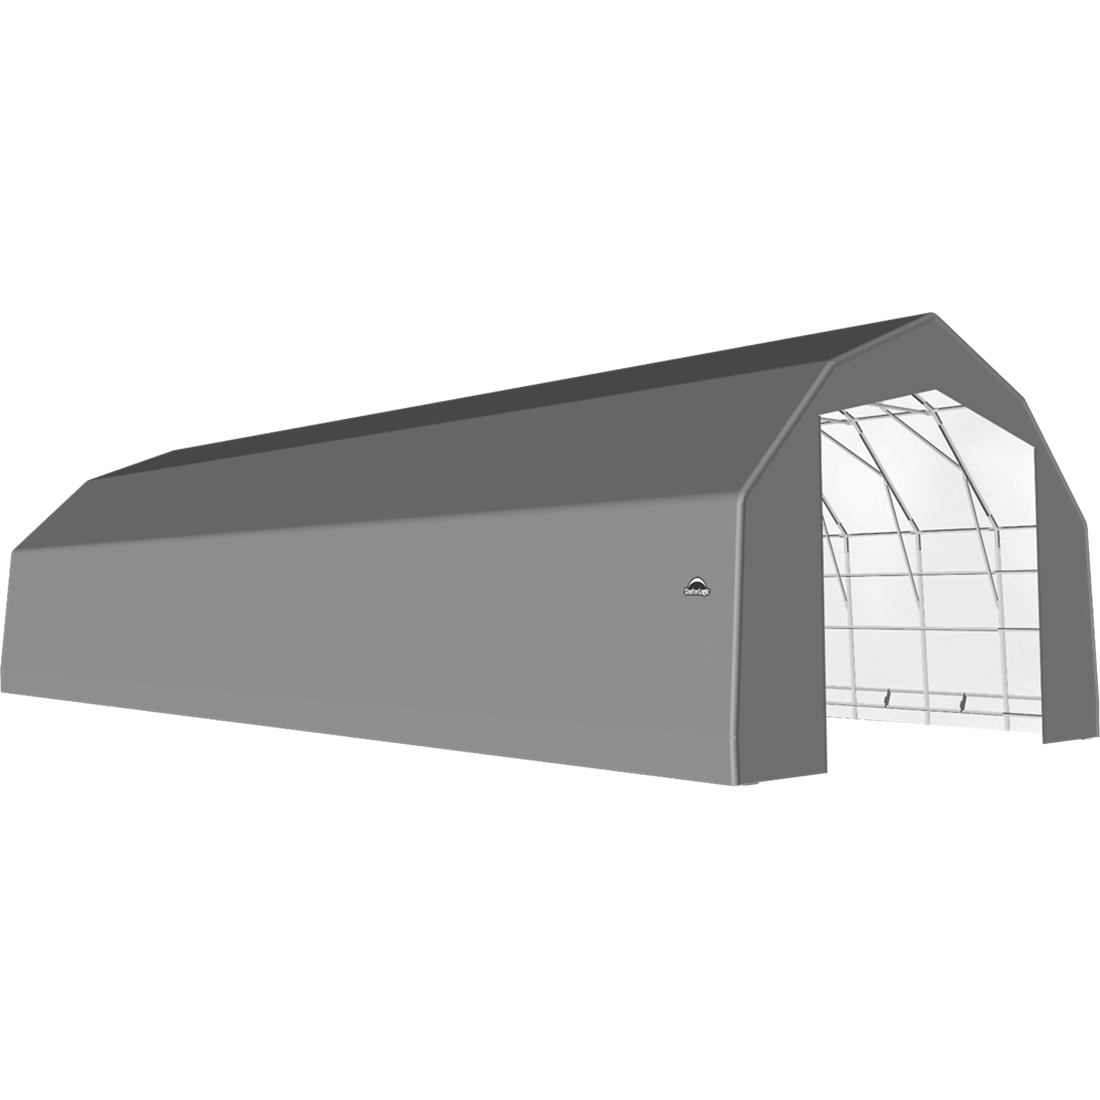 ShelterTech SP Series Barn Shelter, 25 ft. x 60 ft. x 17 ft. Heavy Duty PVC 14.5 oz. Gray